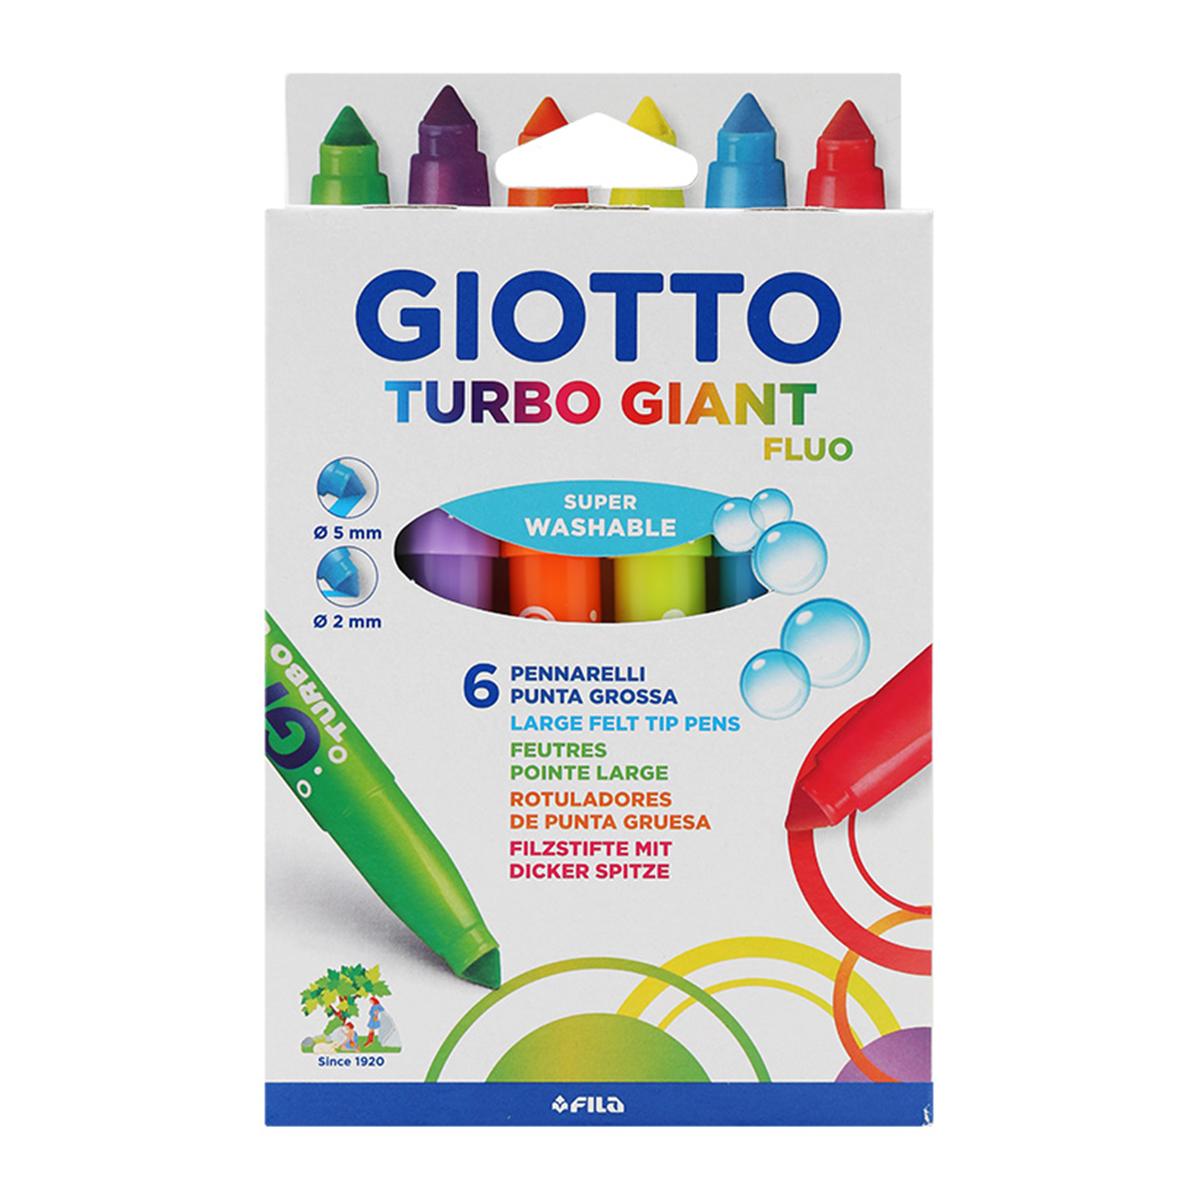 Hop But Da, Dau To Giotto Turbo Giant 6 Mau 433000EQVIET